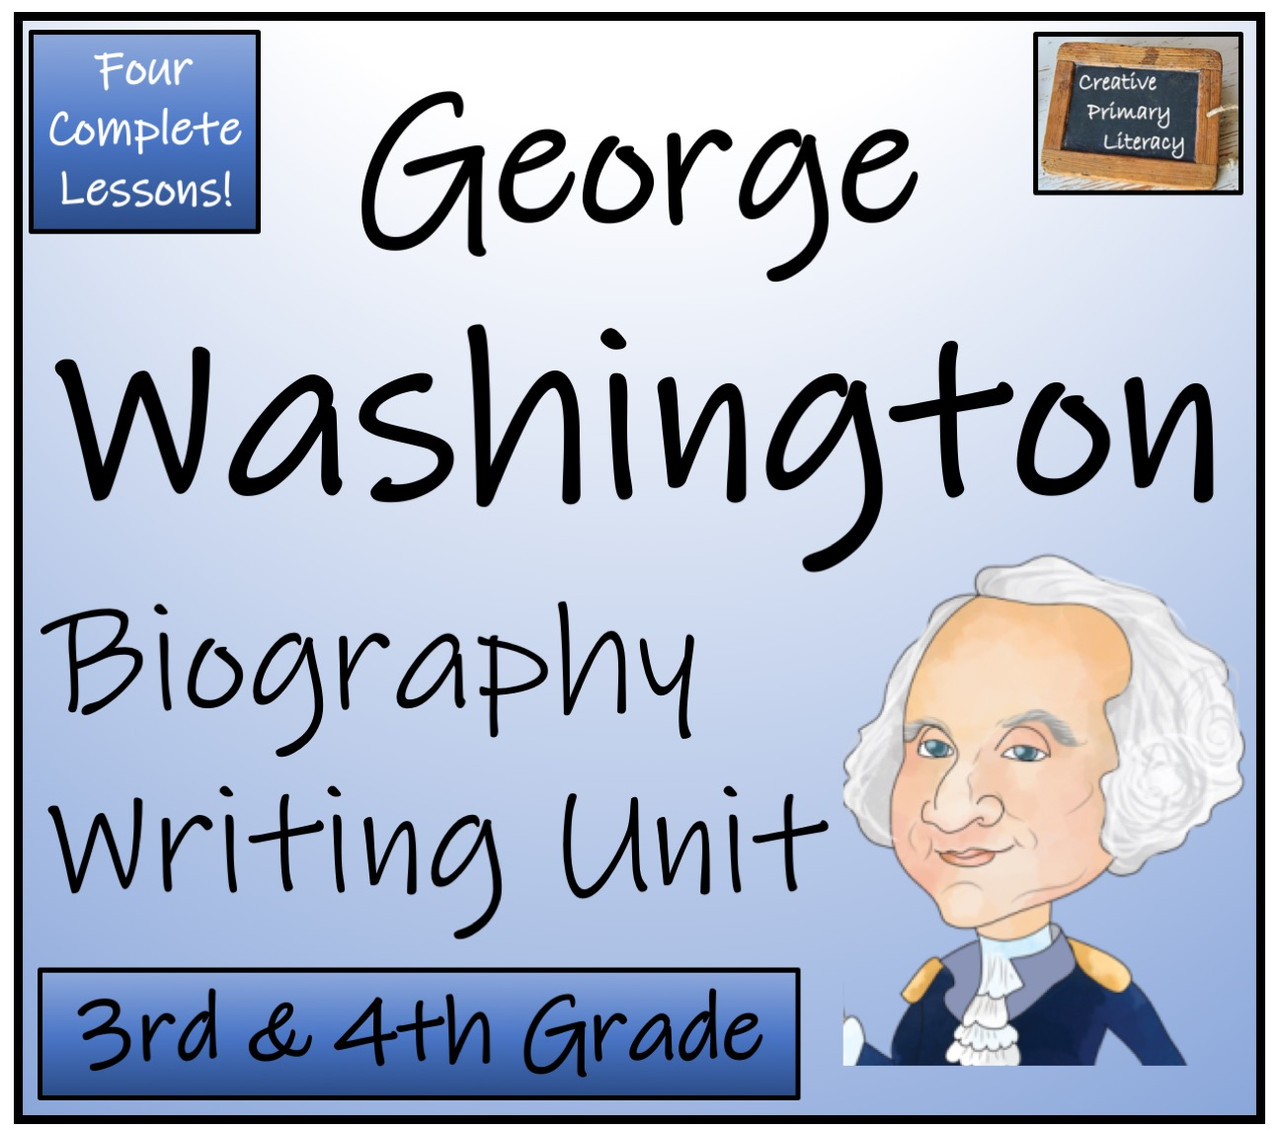 George Washington - 3rd & 4th Grade Biography Writing Activity